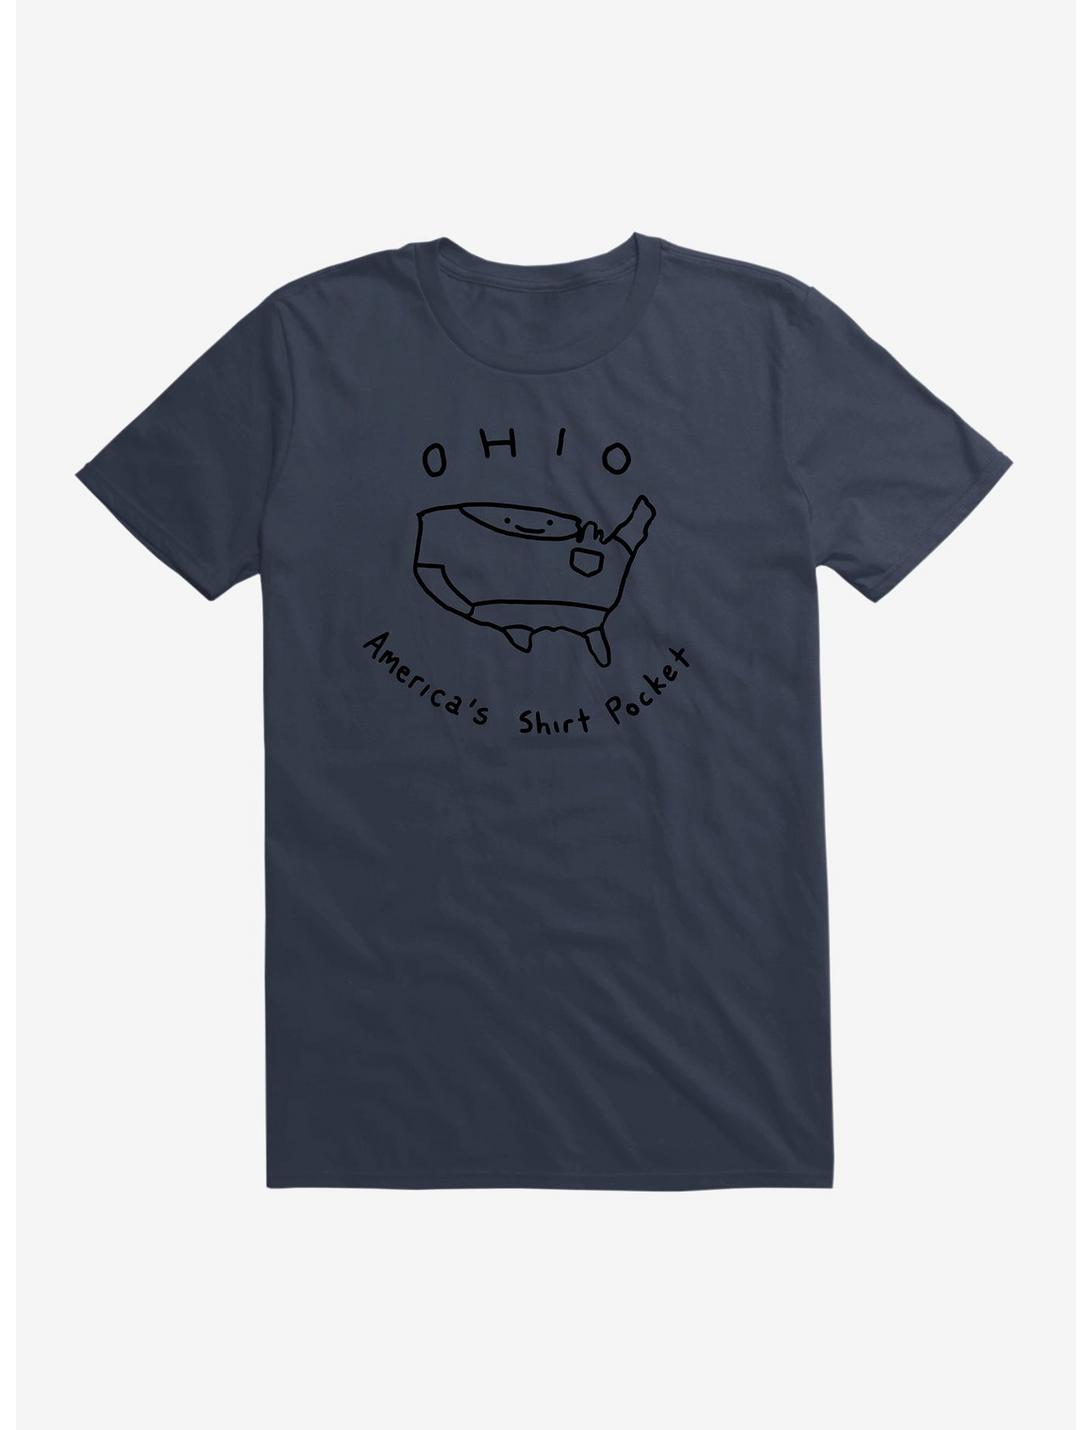 Ohio America's Shirt Pocket T-Shirt, NAVY, hi-res